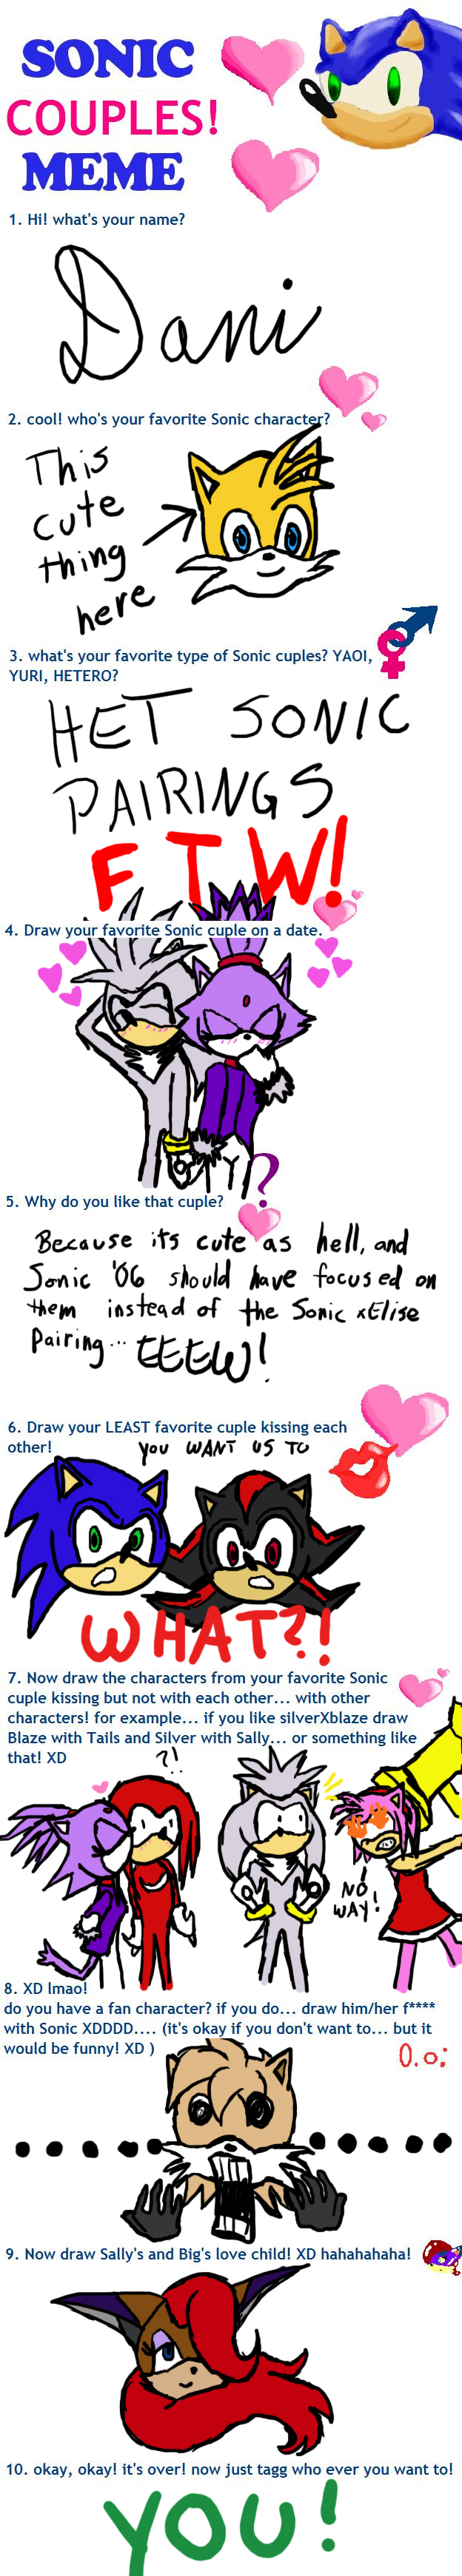 Sonic Couples Meme